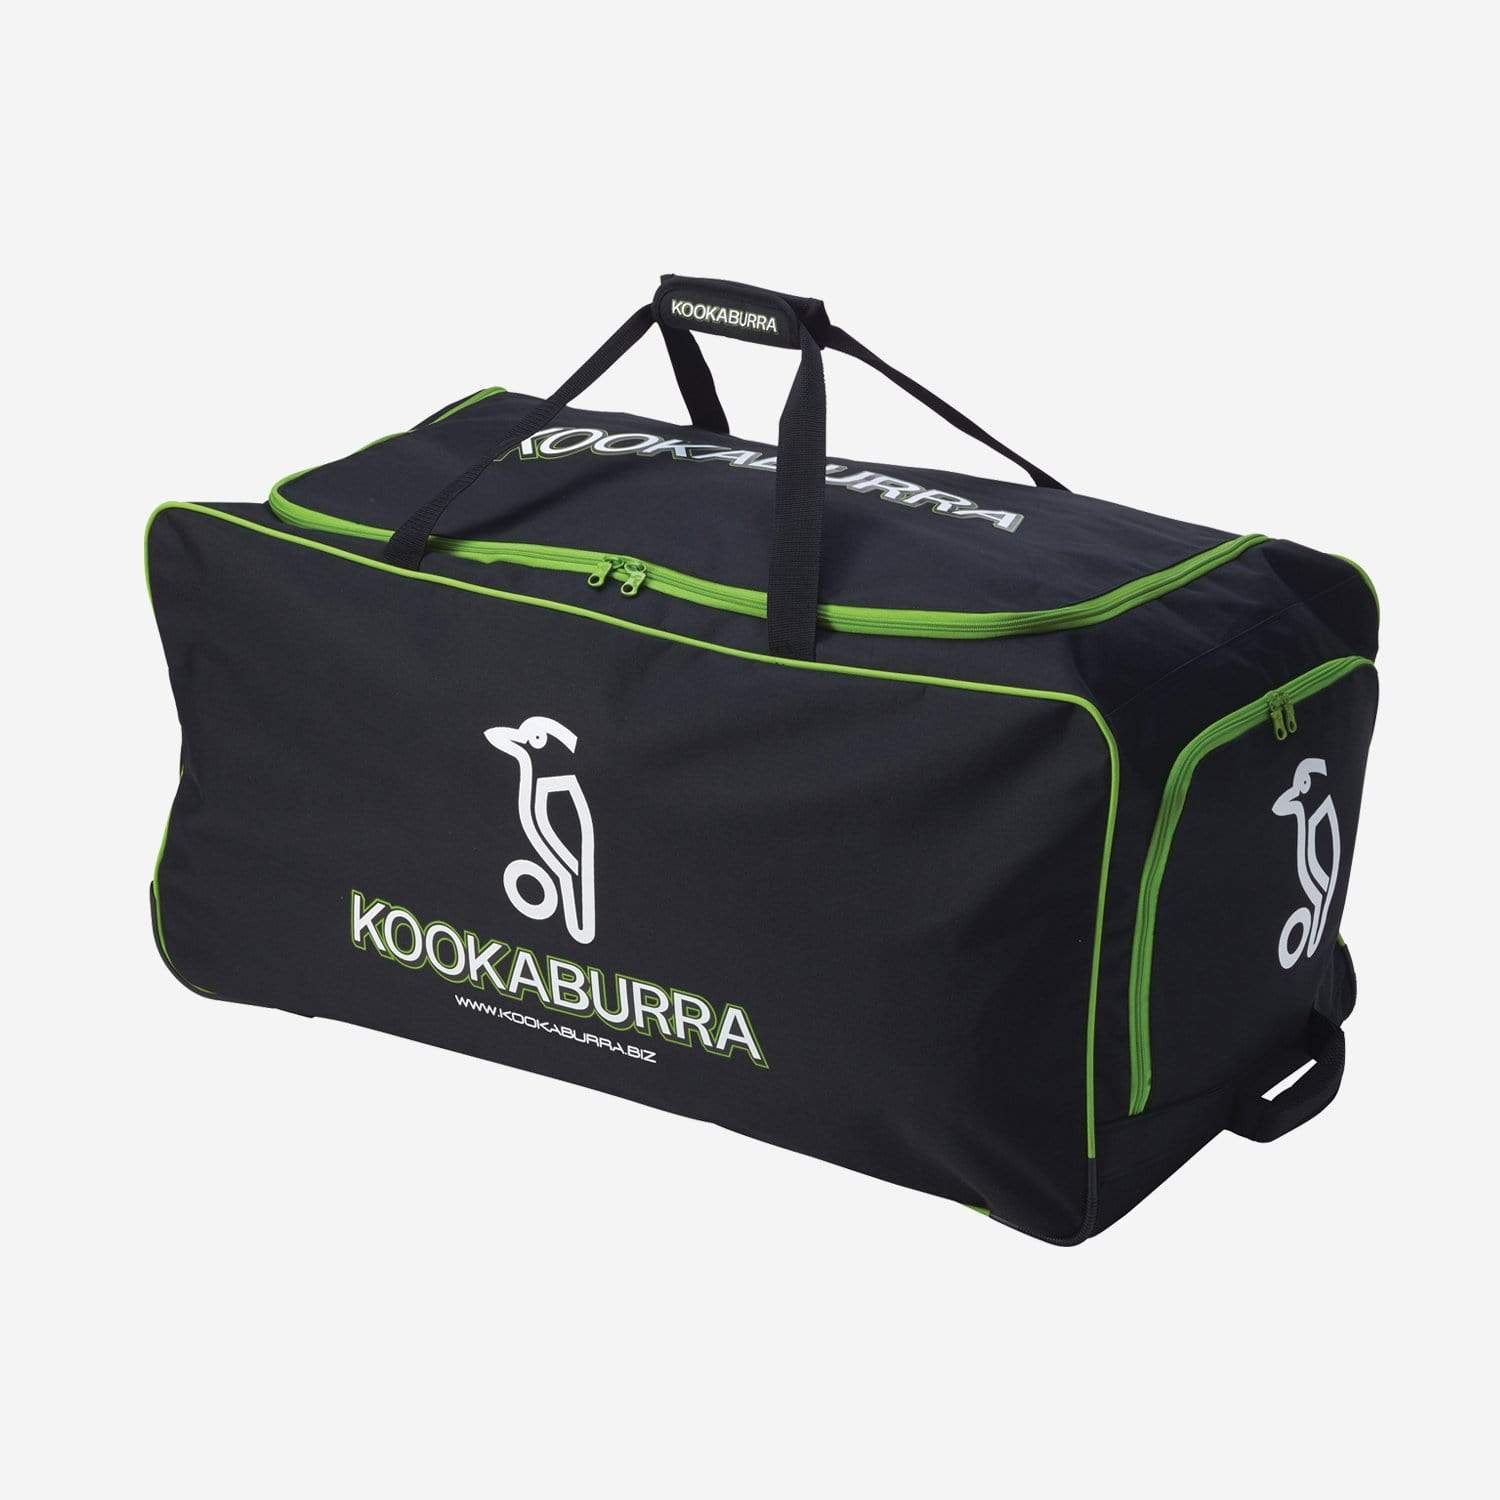 Kookaburra Cricket Bags Black/Lime Kookaburra Wheels Cricket Kit Bag